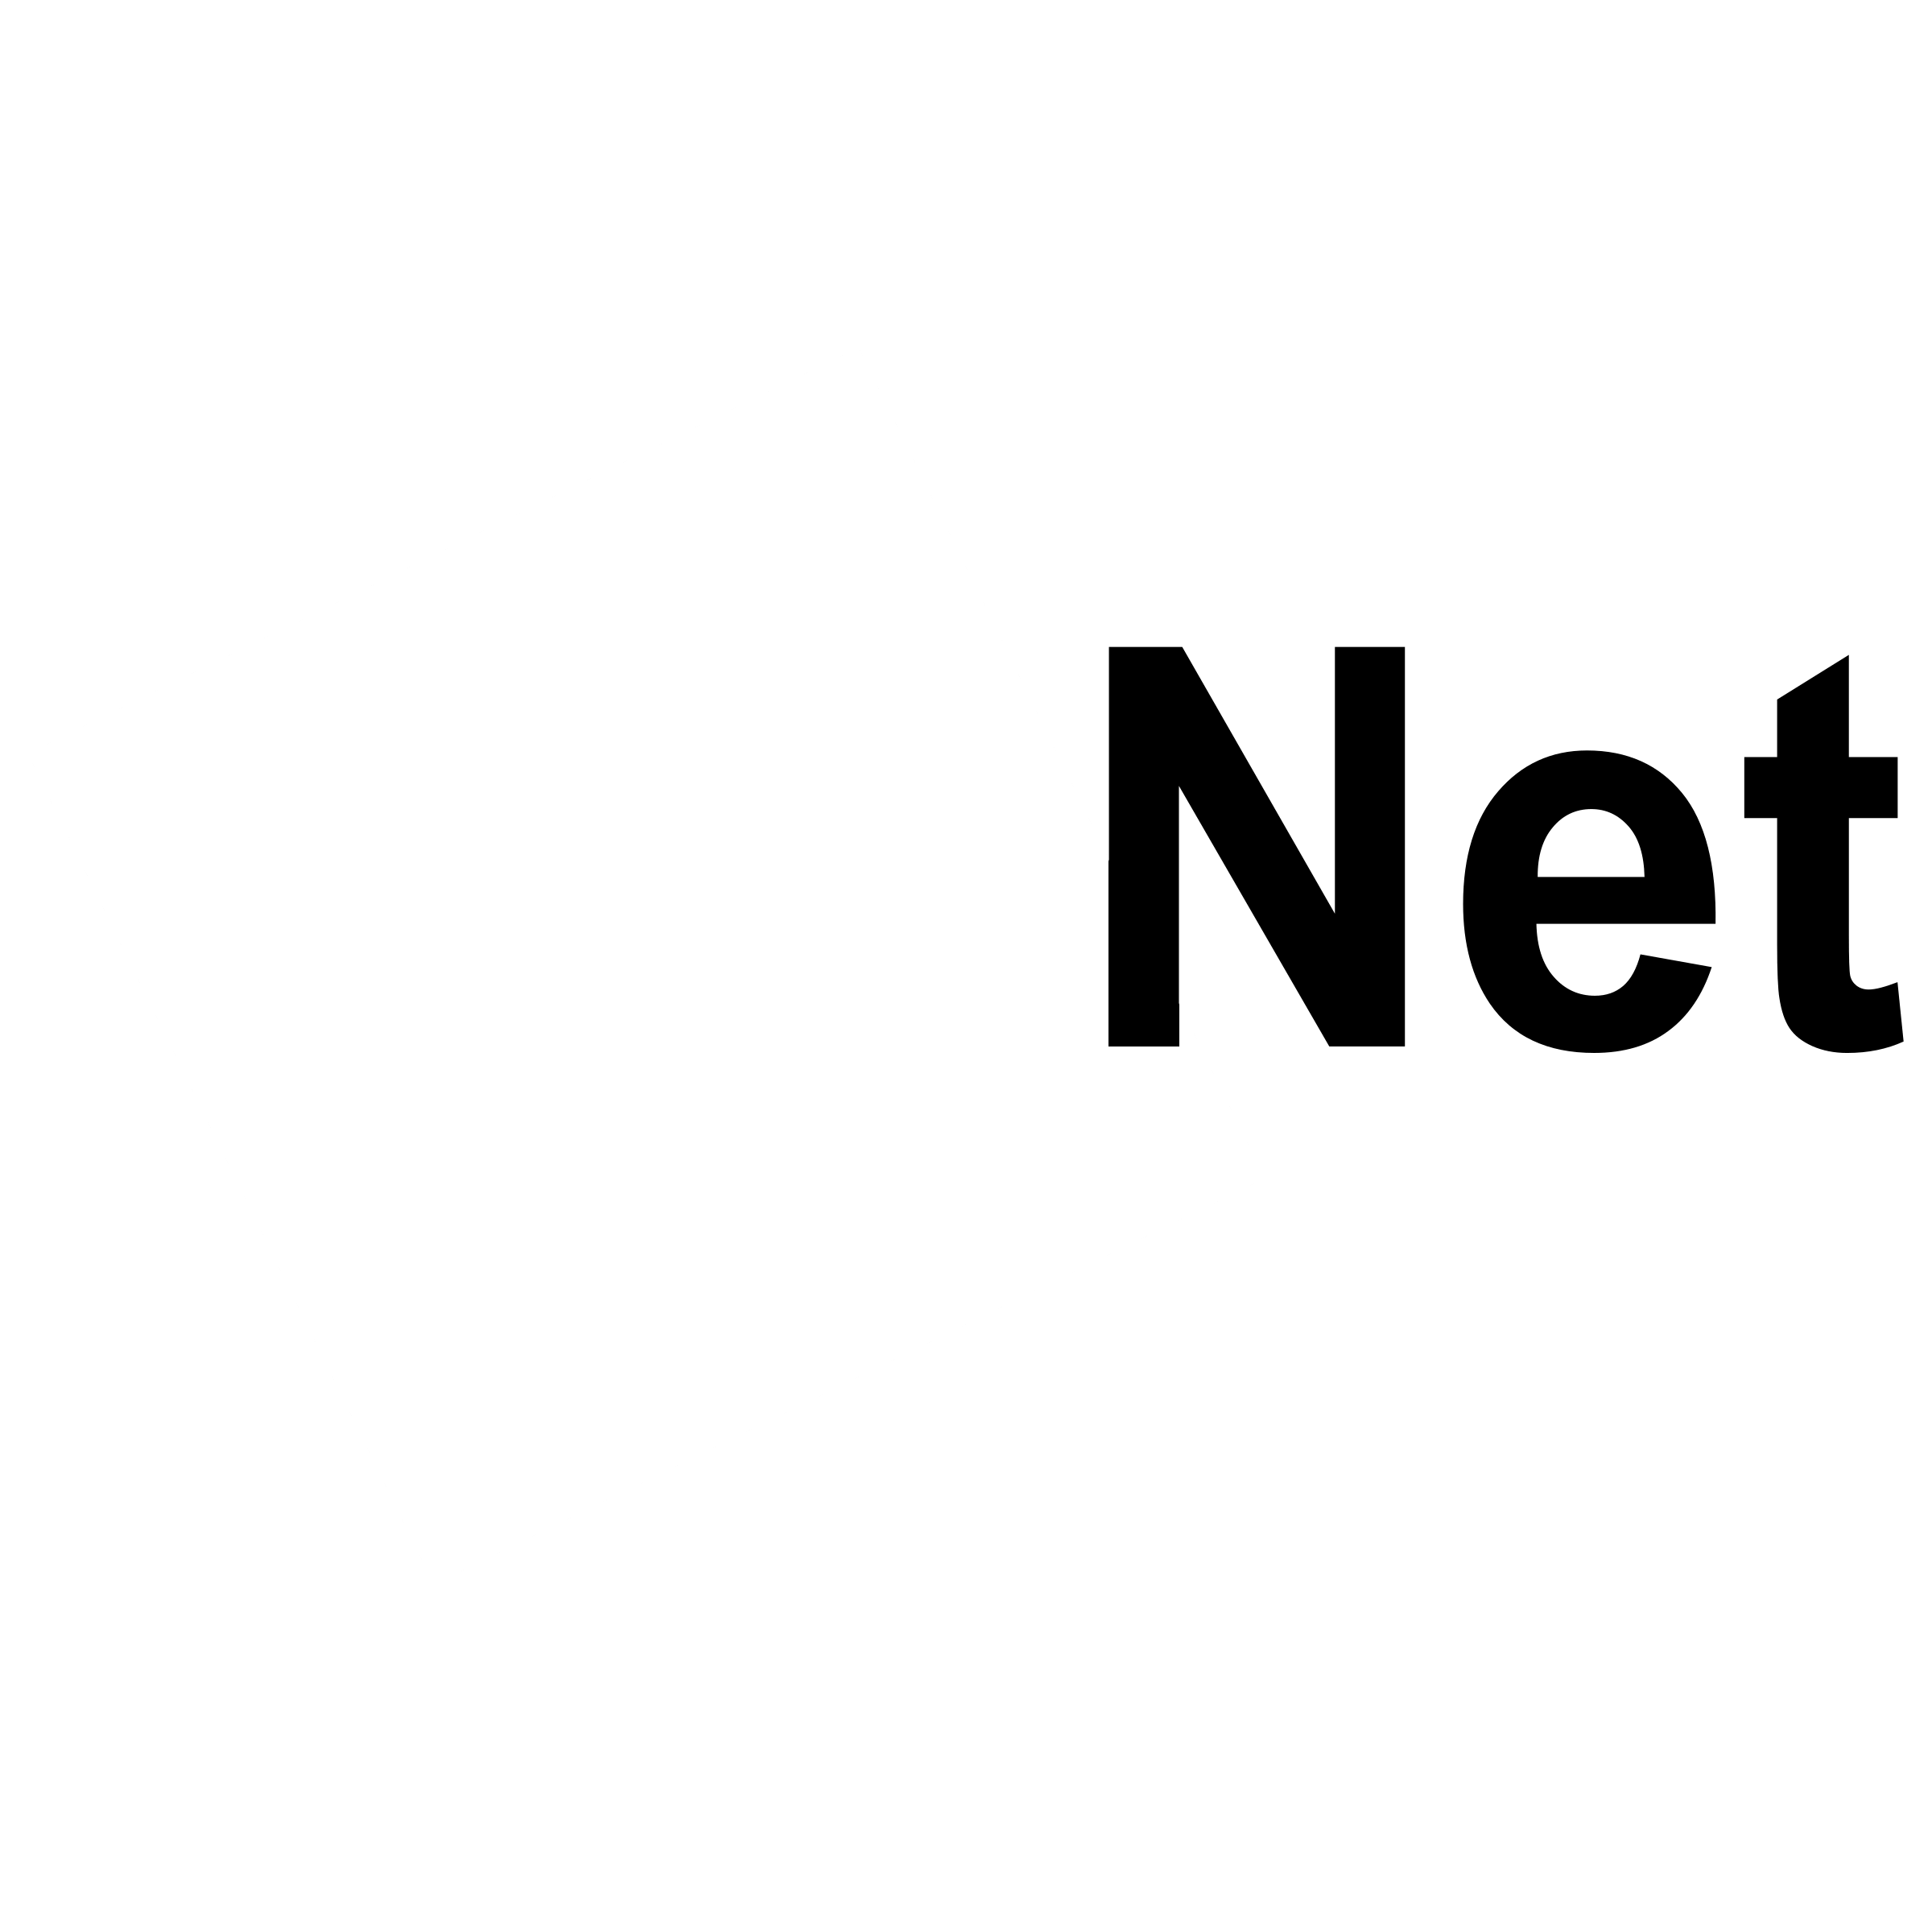 ZDNet Logo - ZDNet Logo PNG Transparent & SVG Vector